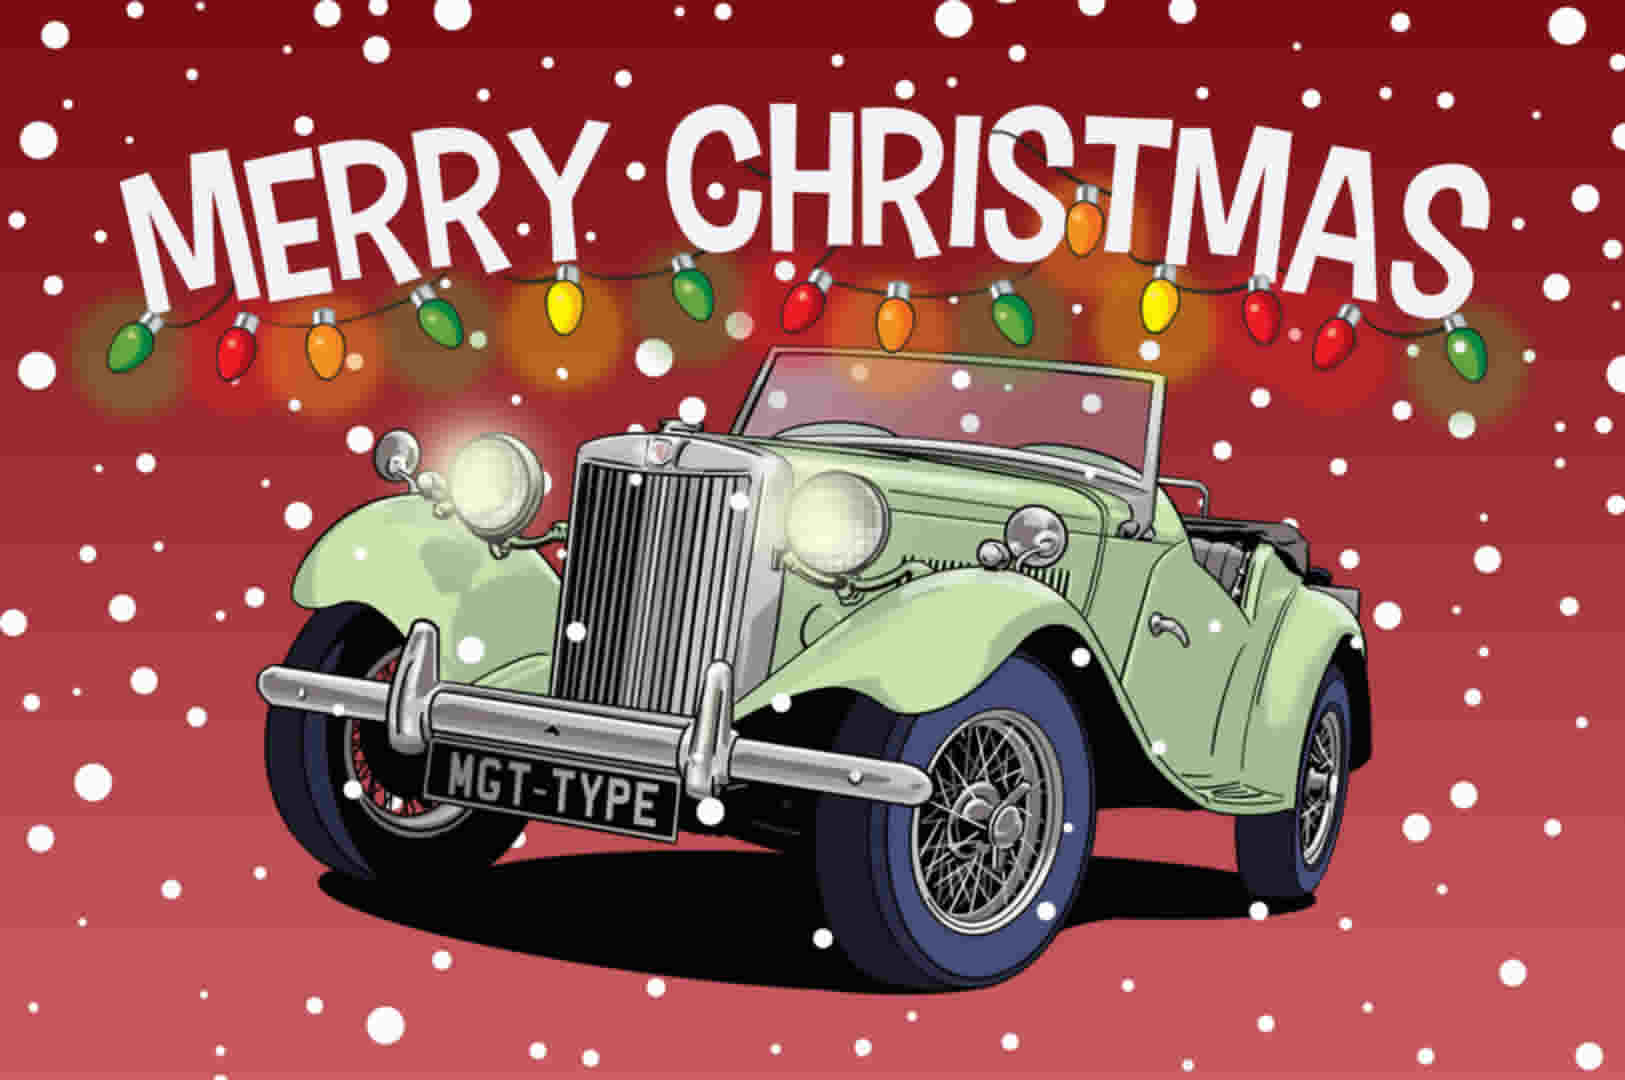  MG T-type vintage car Christmas Card